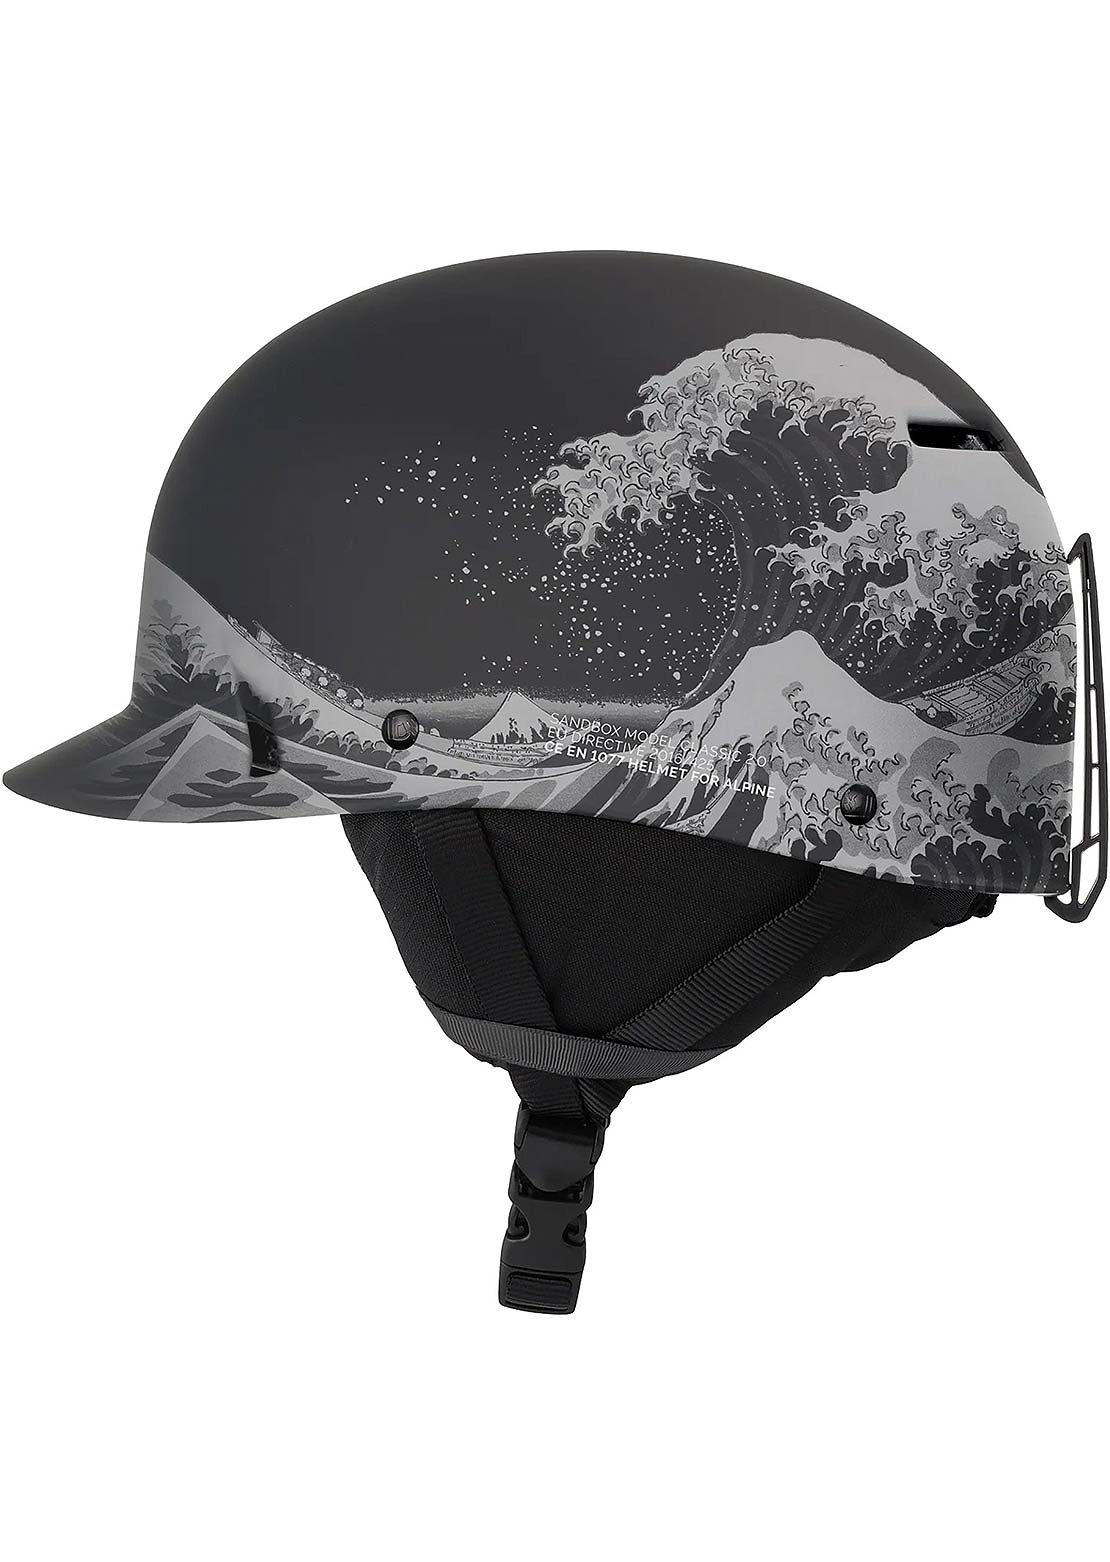 Sandbox Classic 2.0 Snow Winter Helmet Board Archive